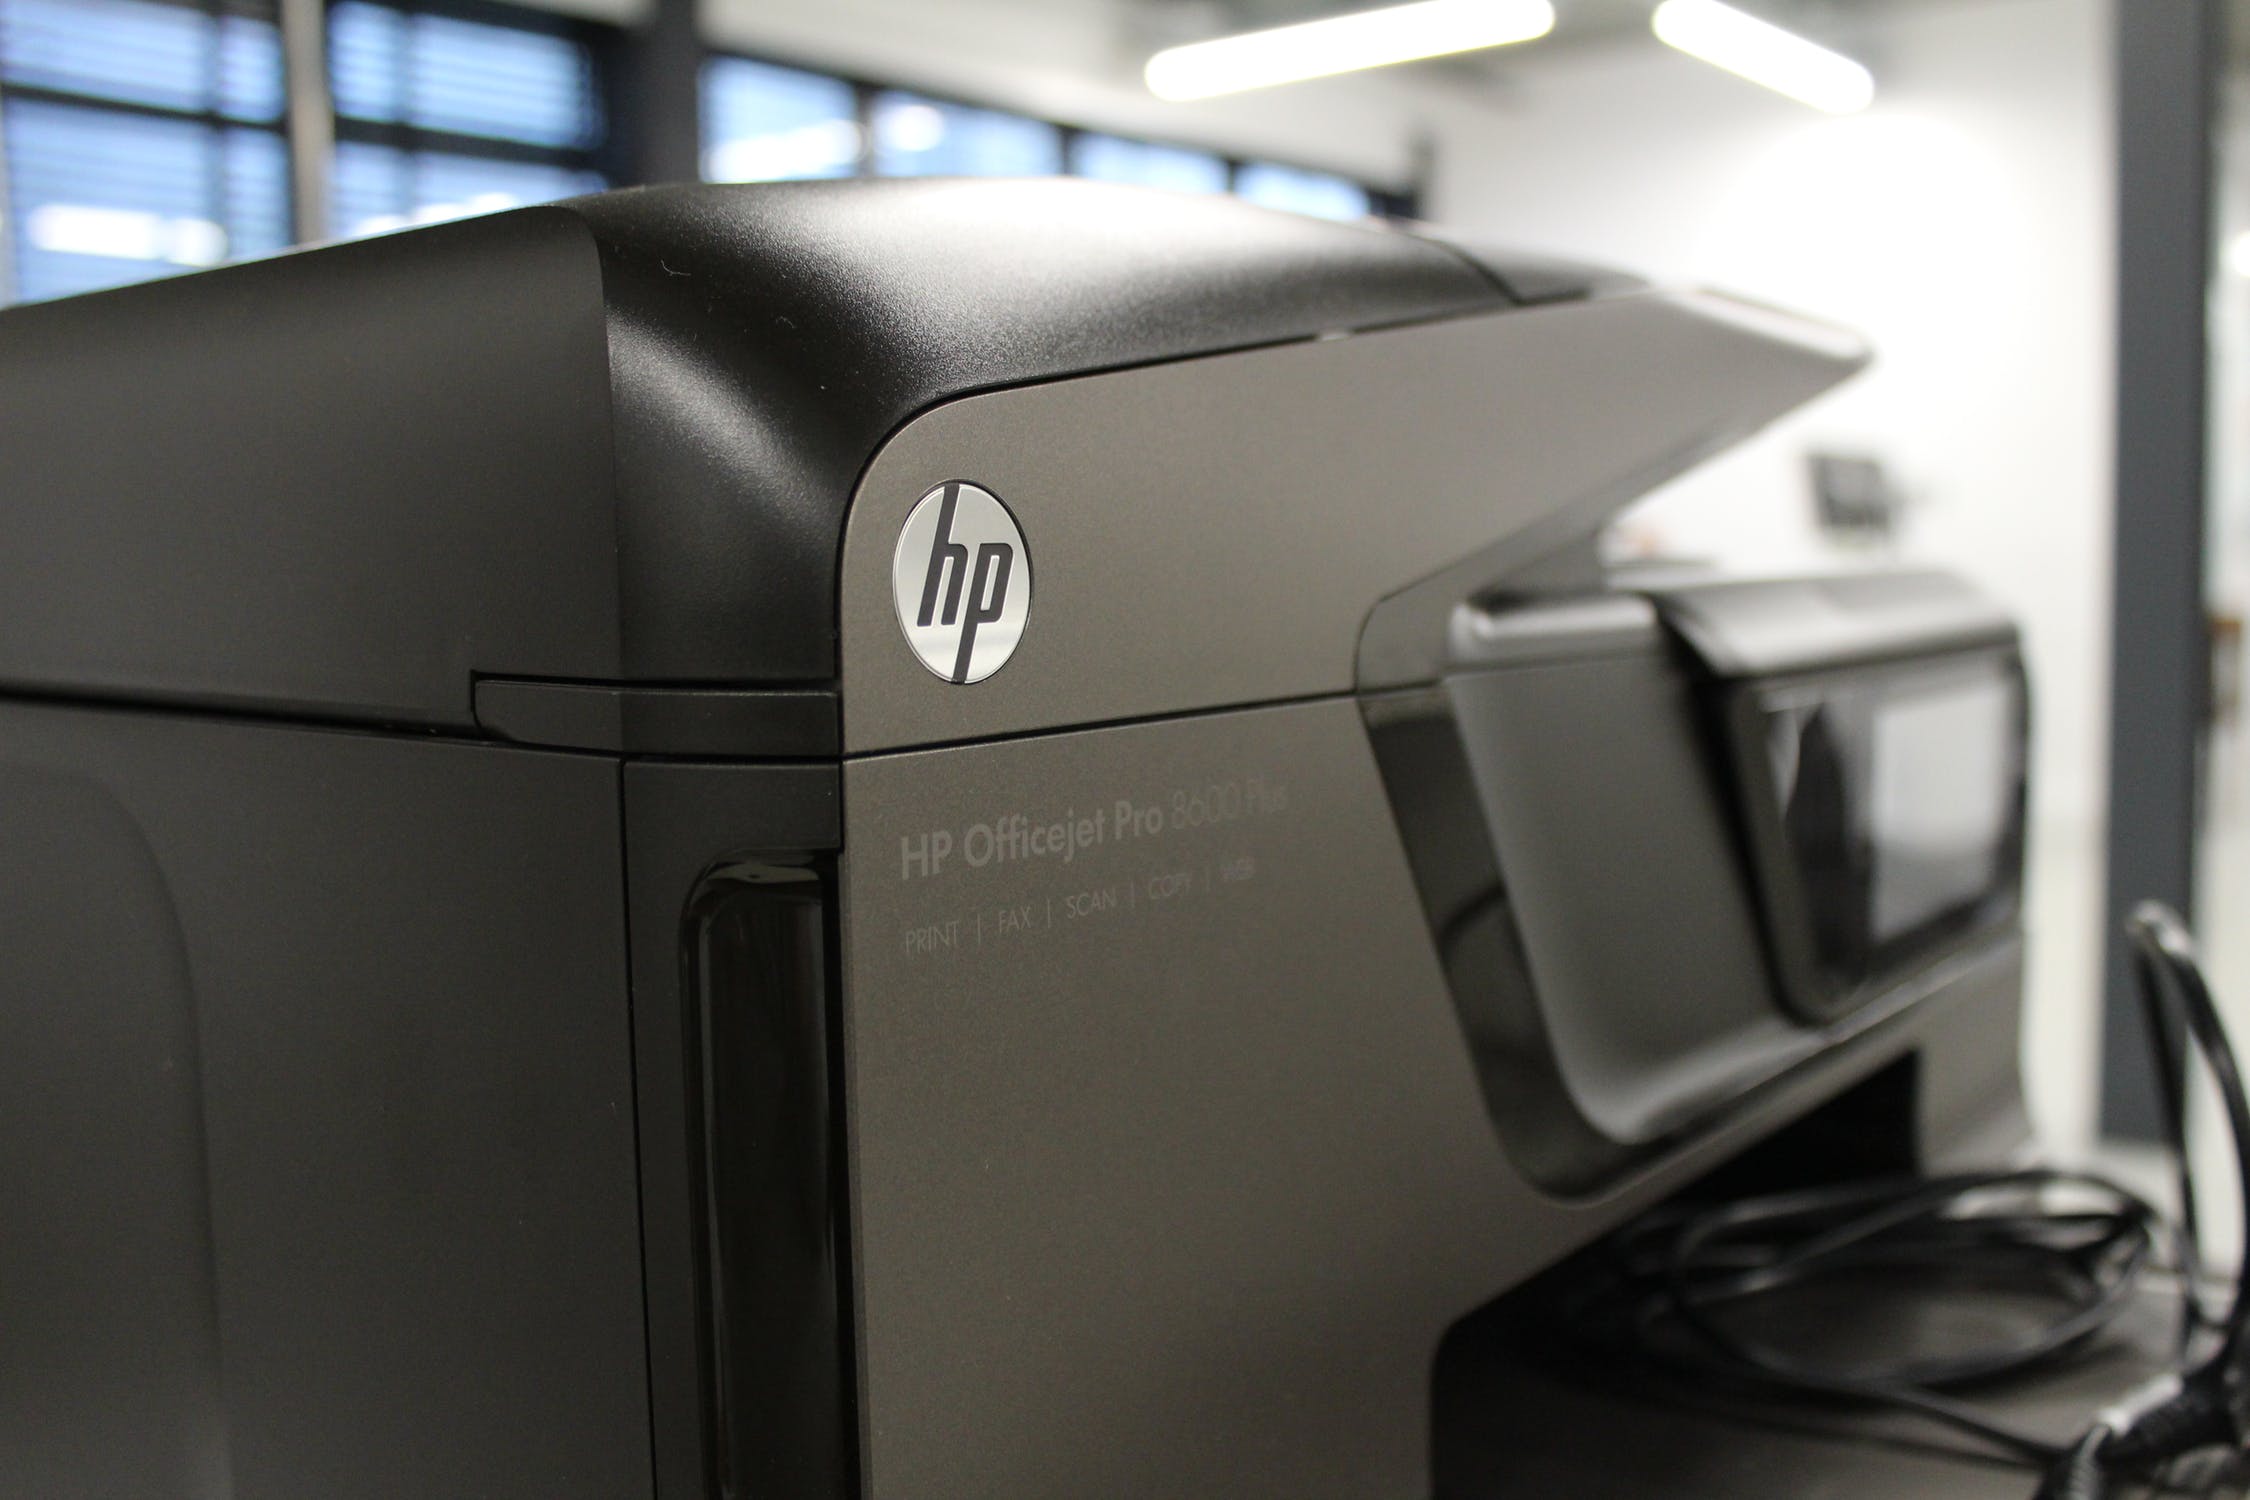 Jaki tusz do drukarki HP?